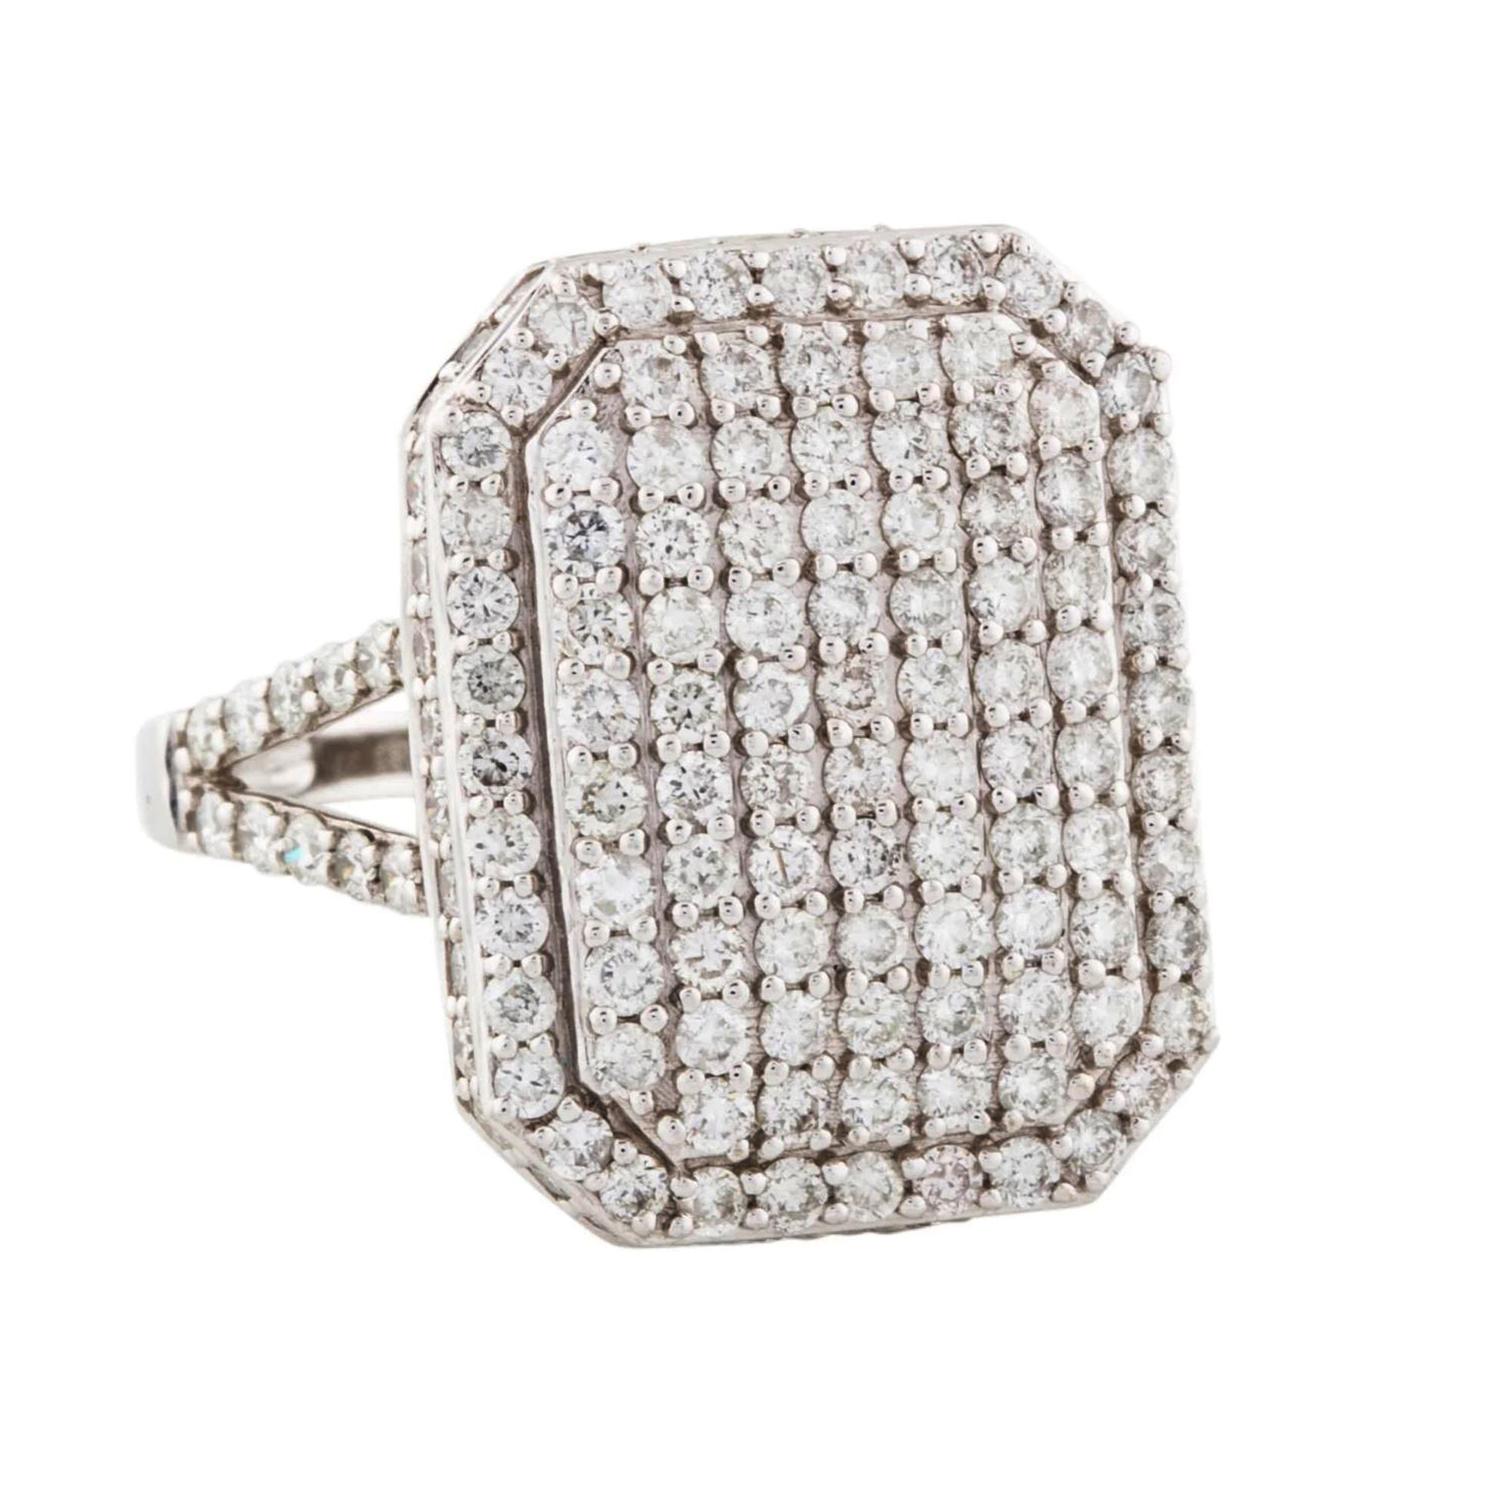 Art Nouveau Octogen Shape Signet Pave Diamonds Ring In 18k White Gold For Sale